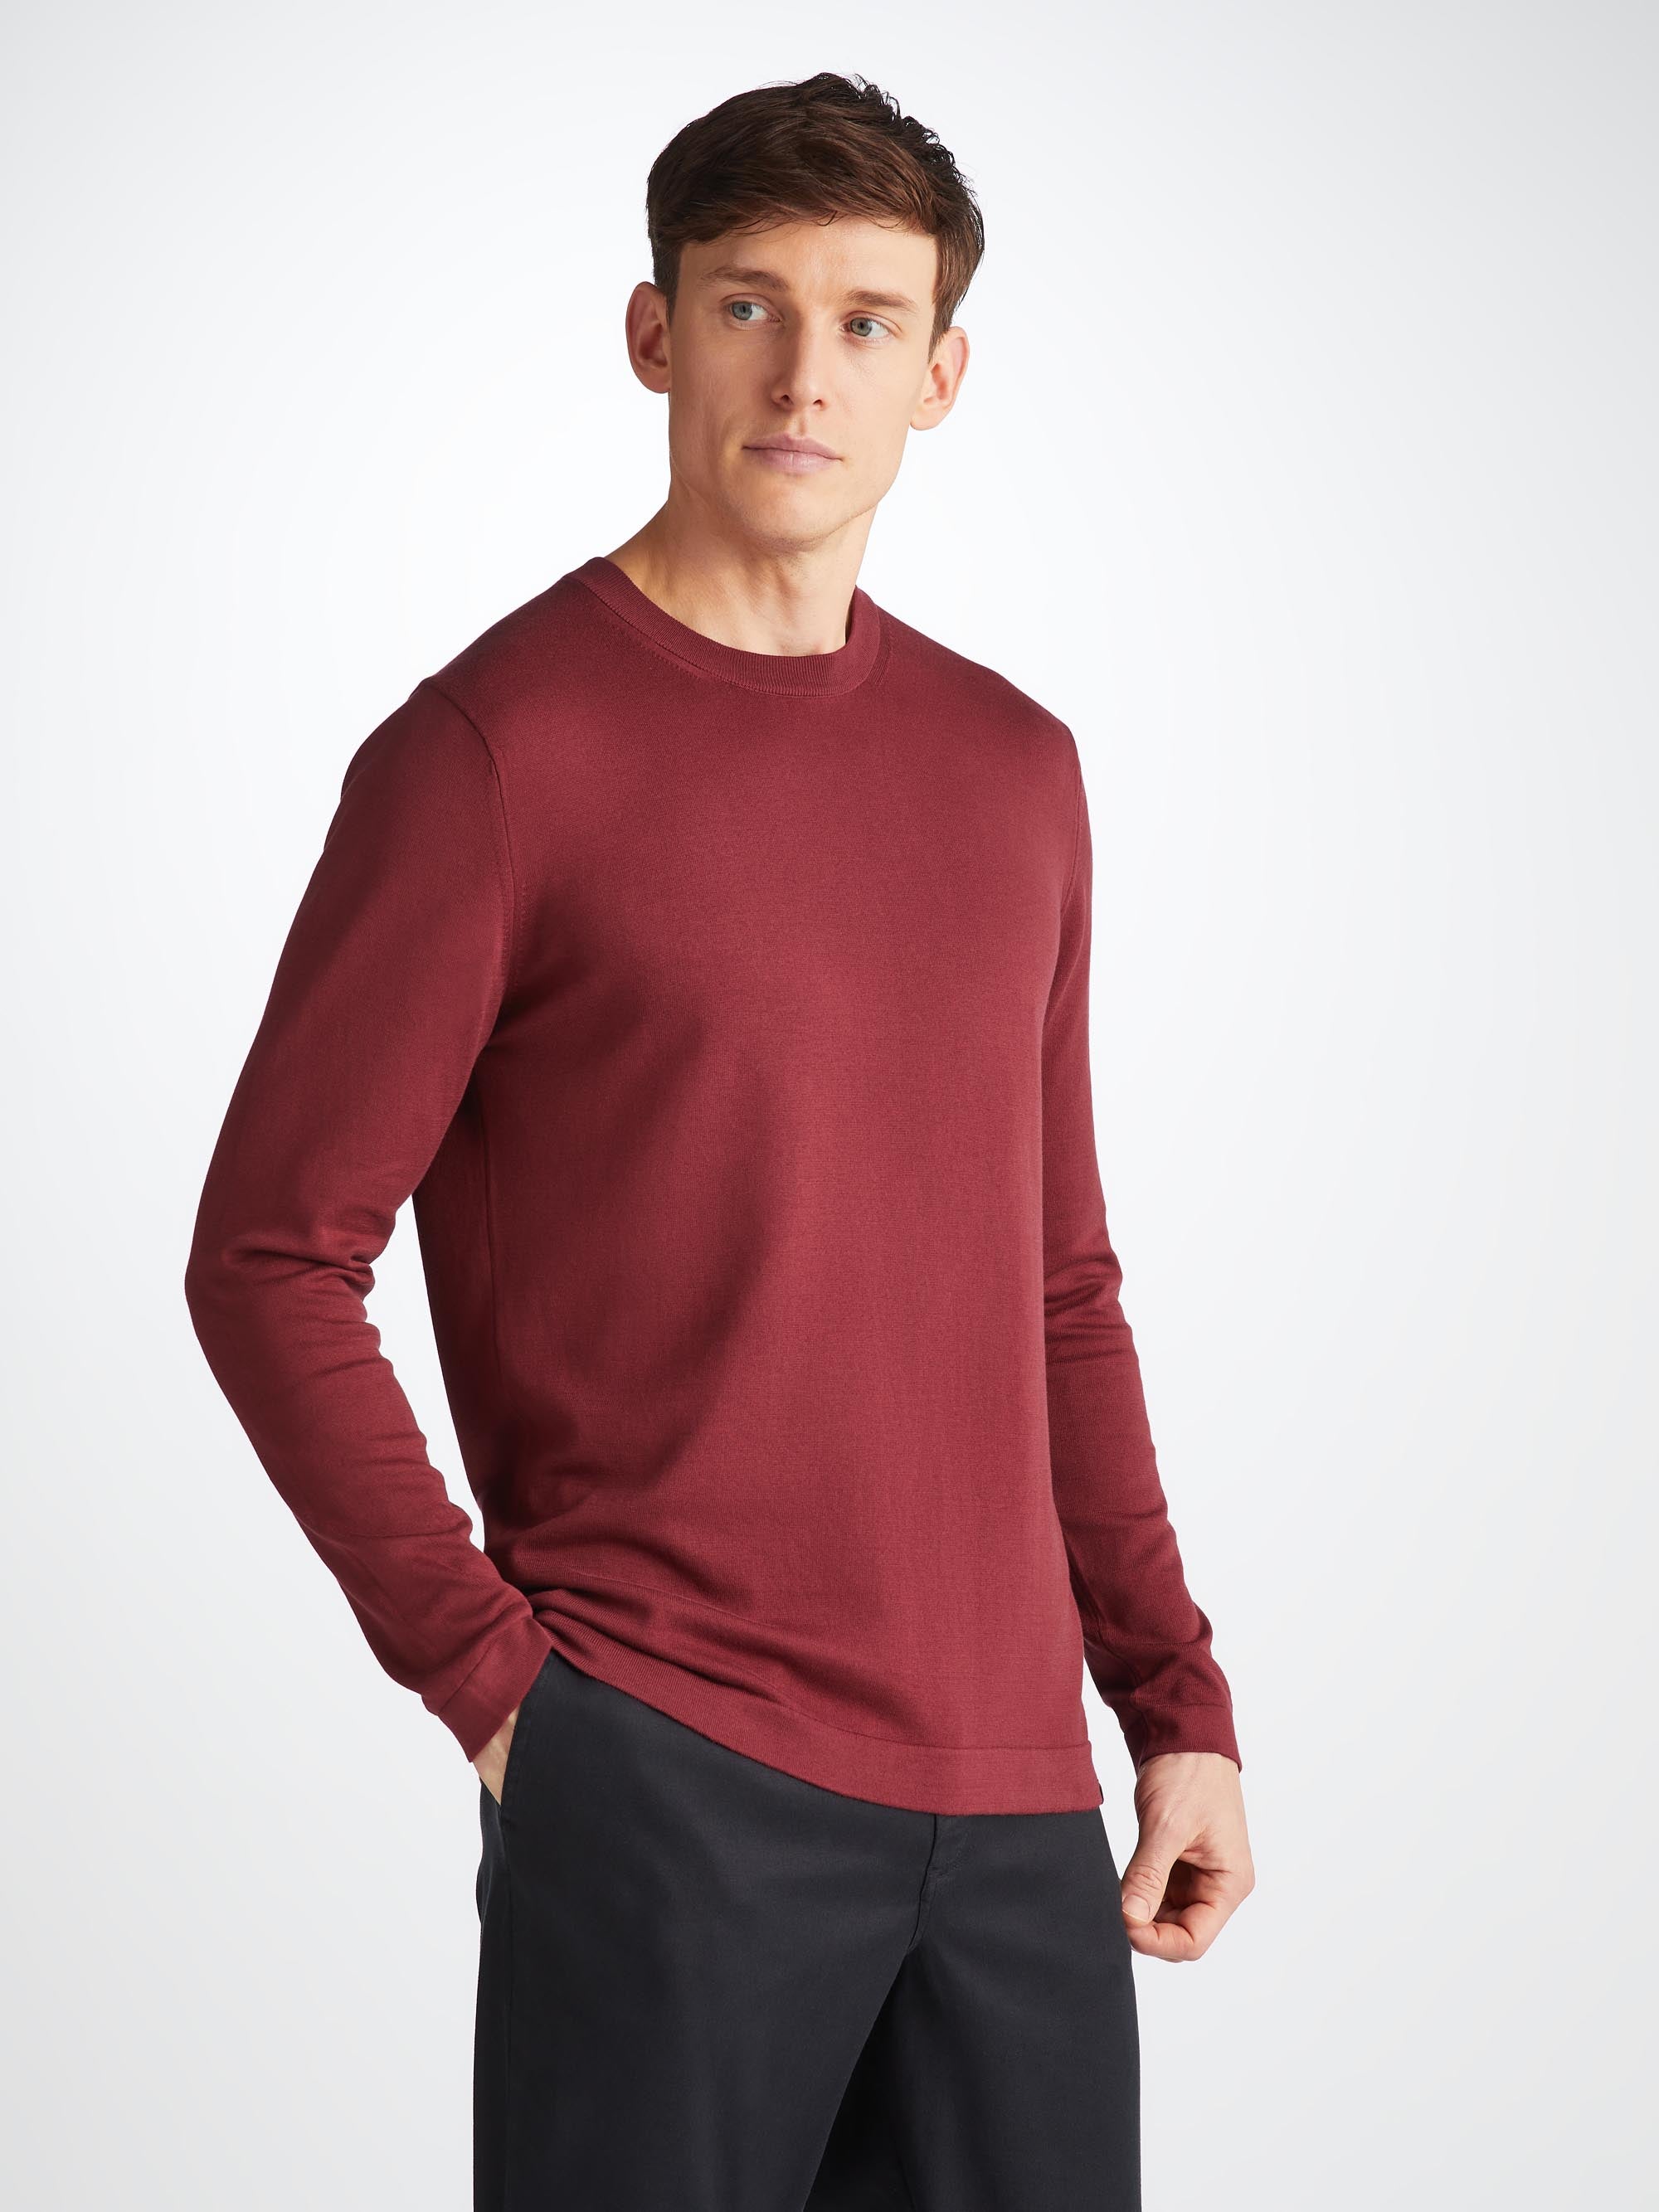 Men's Sweater Jacob Sea Island Cotton Burgundy